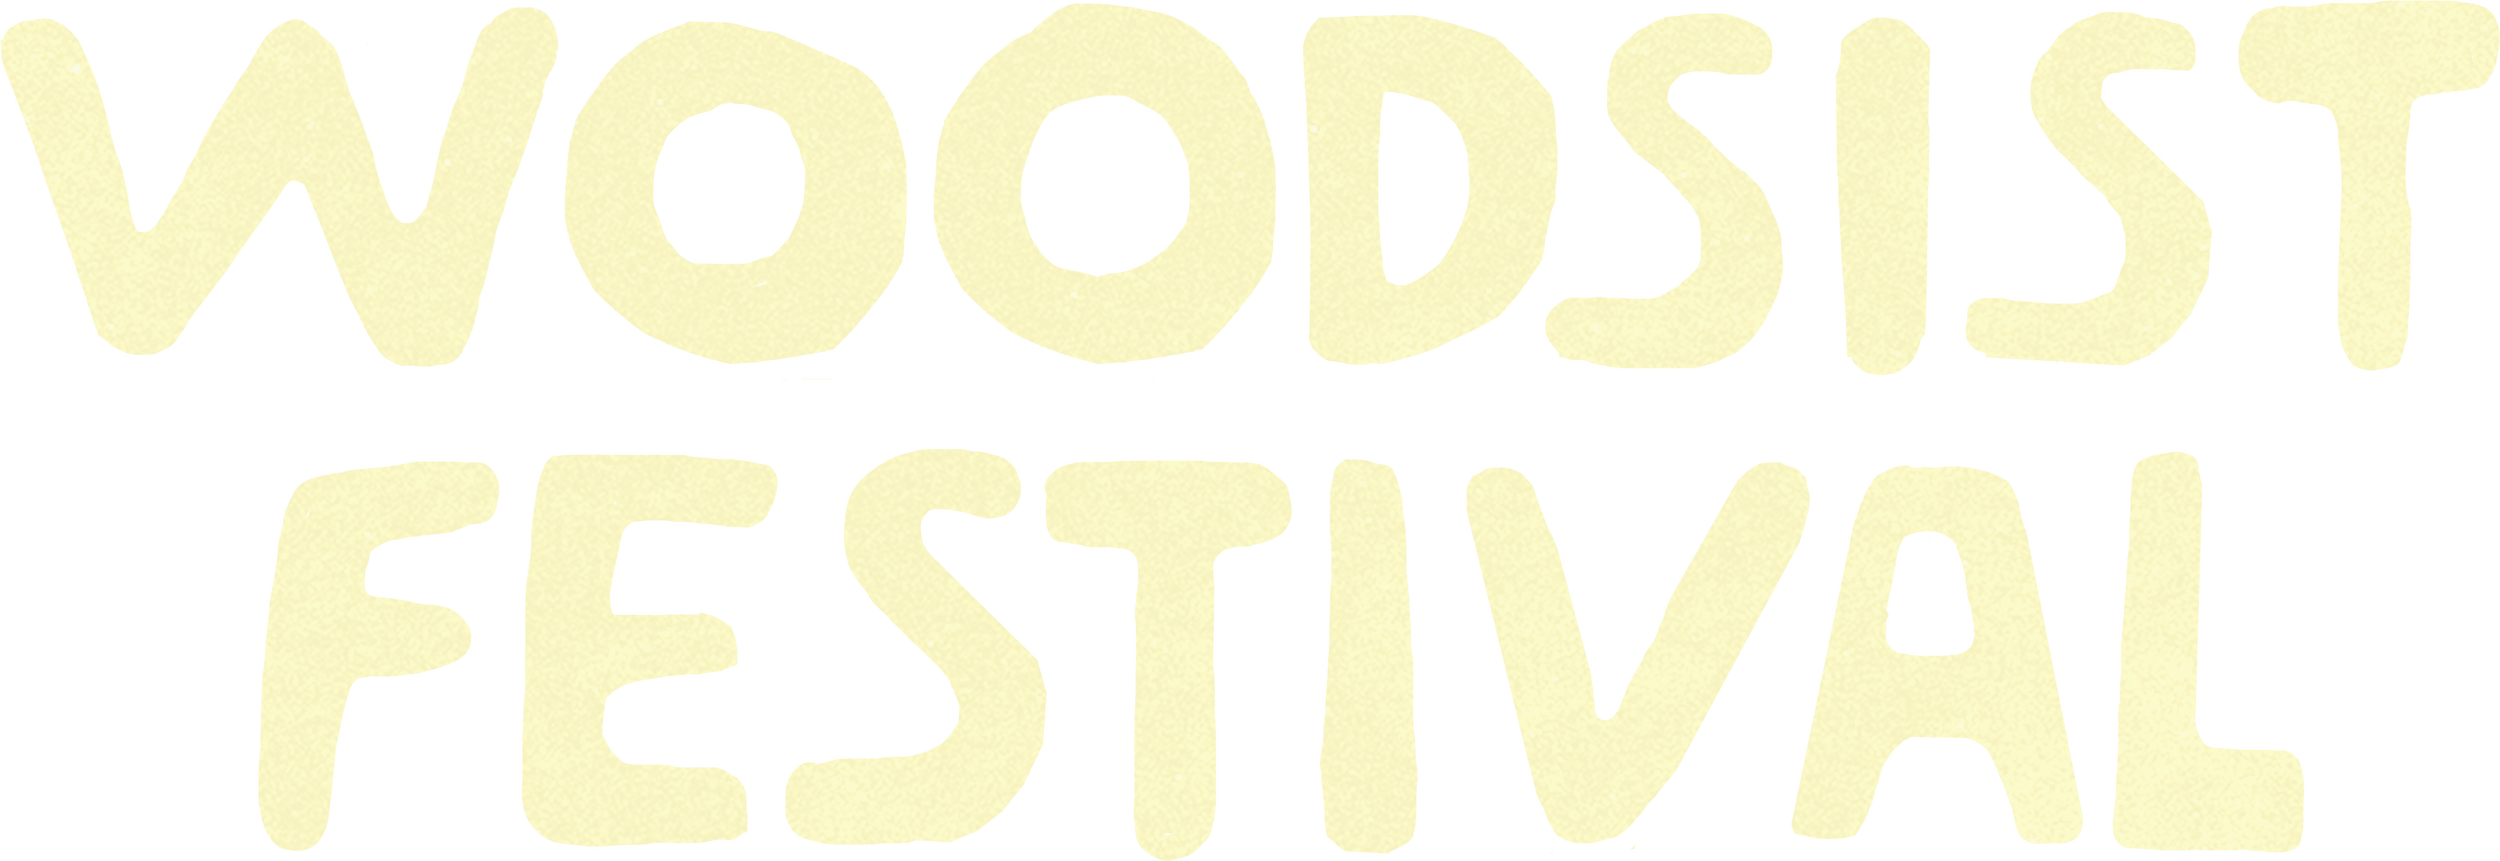 Woodsist Festival